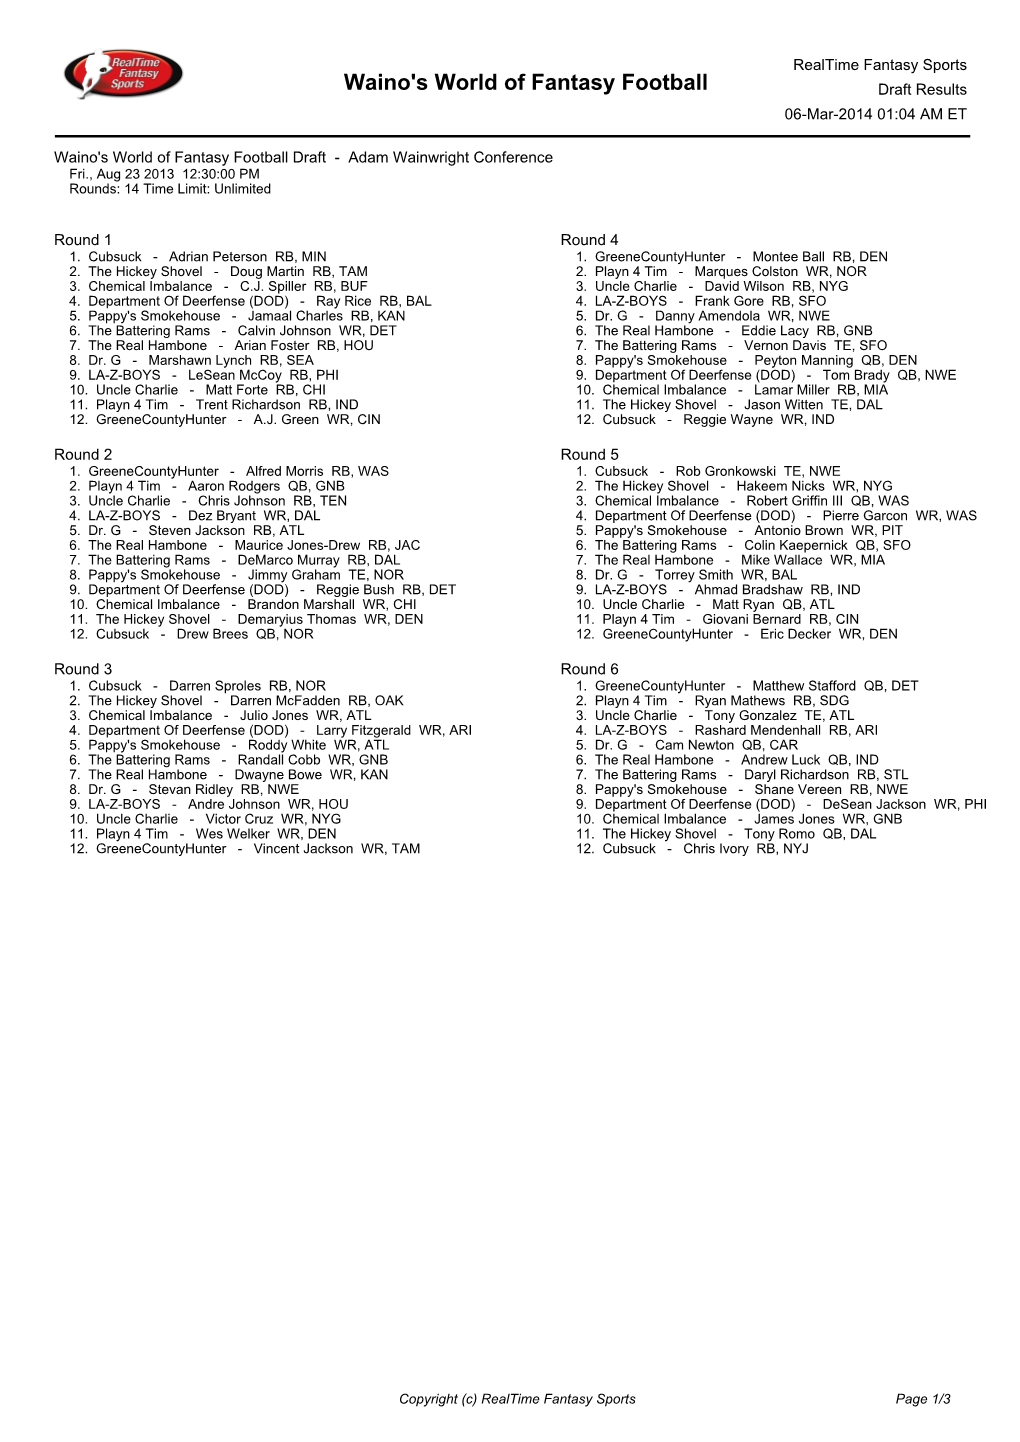 Waino's World of Fantasy Football Draft Results 06-Mar-2014 01:04 AM ET